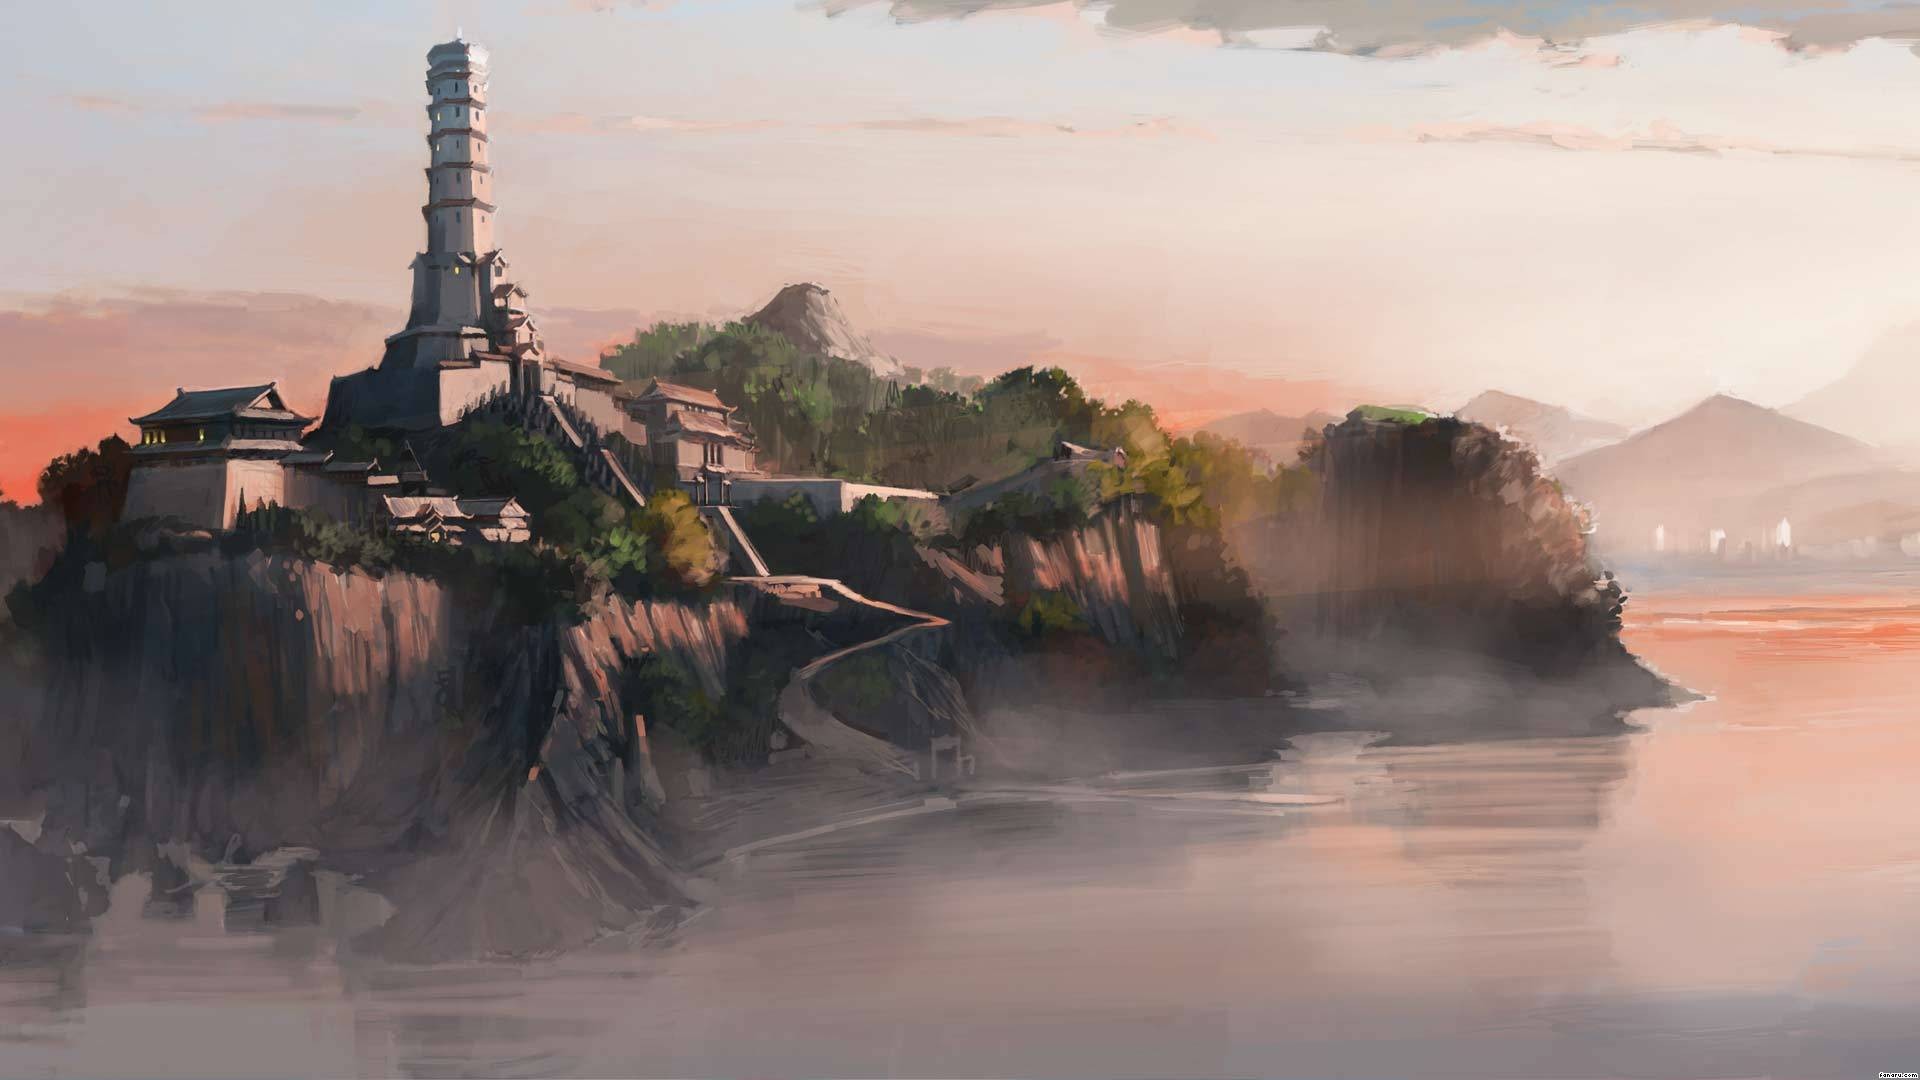 General 1920x1080 Avatar: The Last Airbender The Legend of Korra cartoon fantasy art TV series landscape